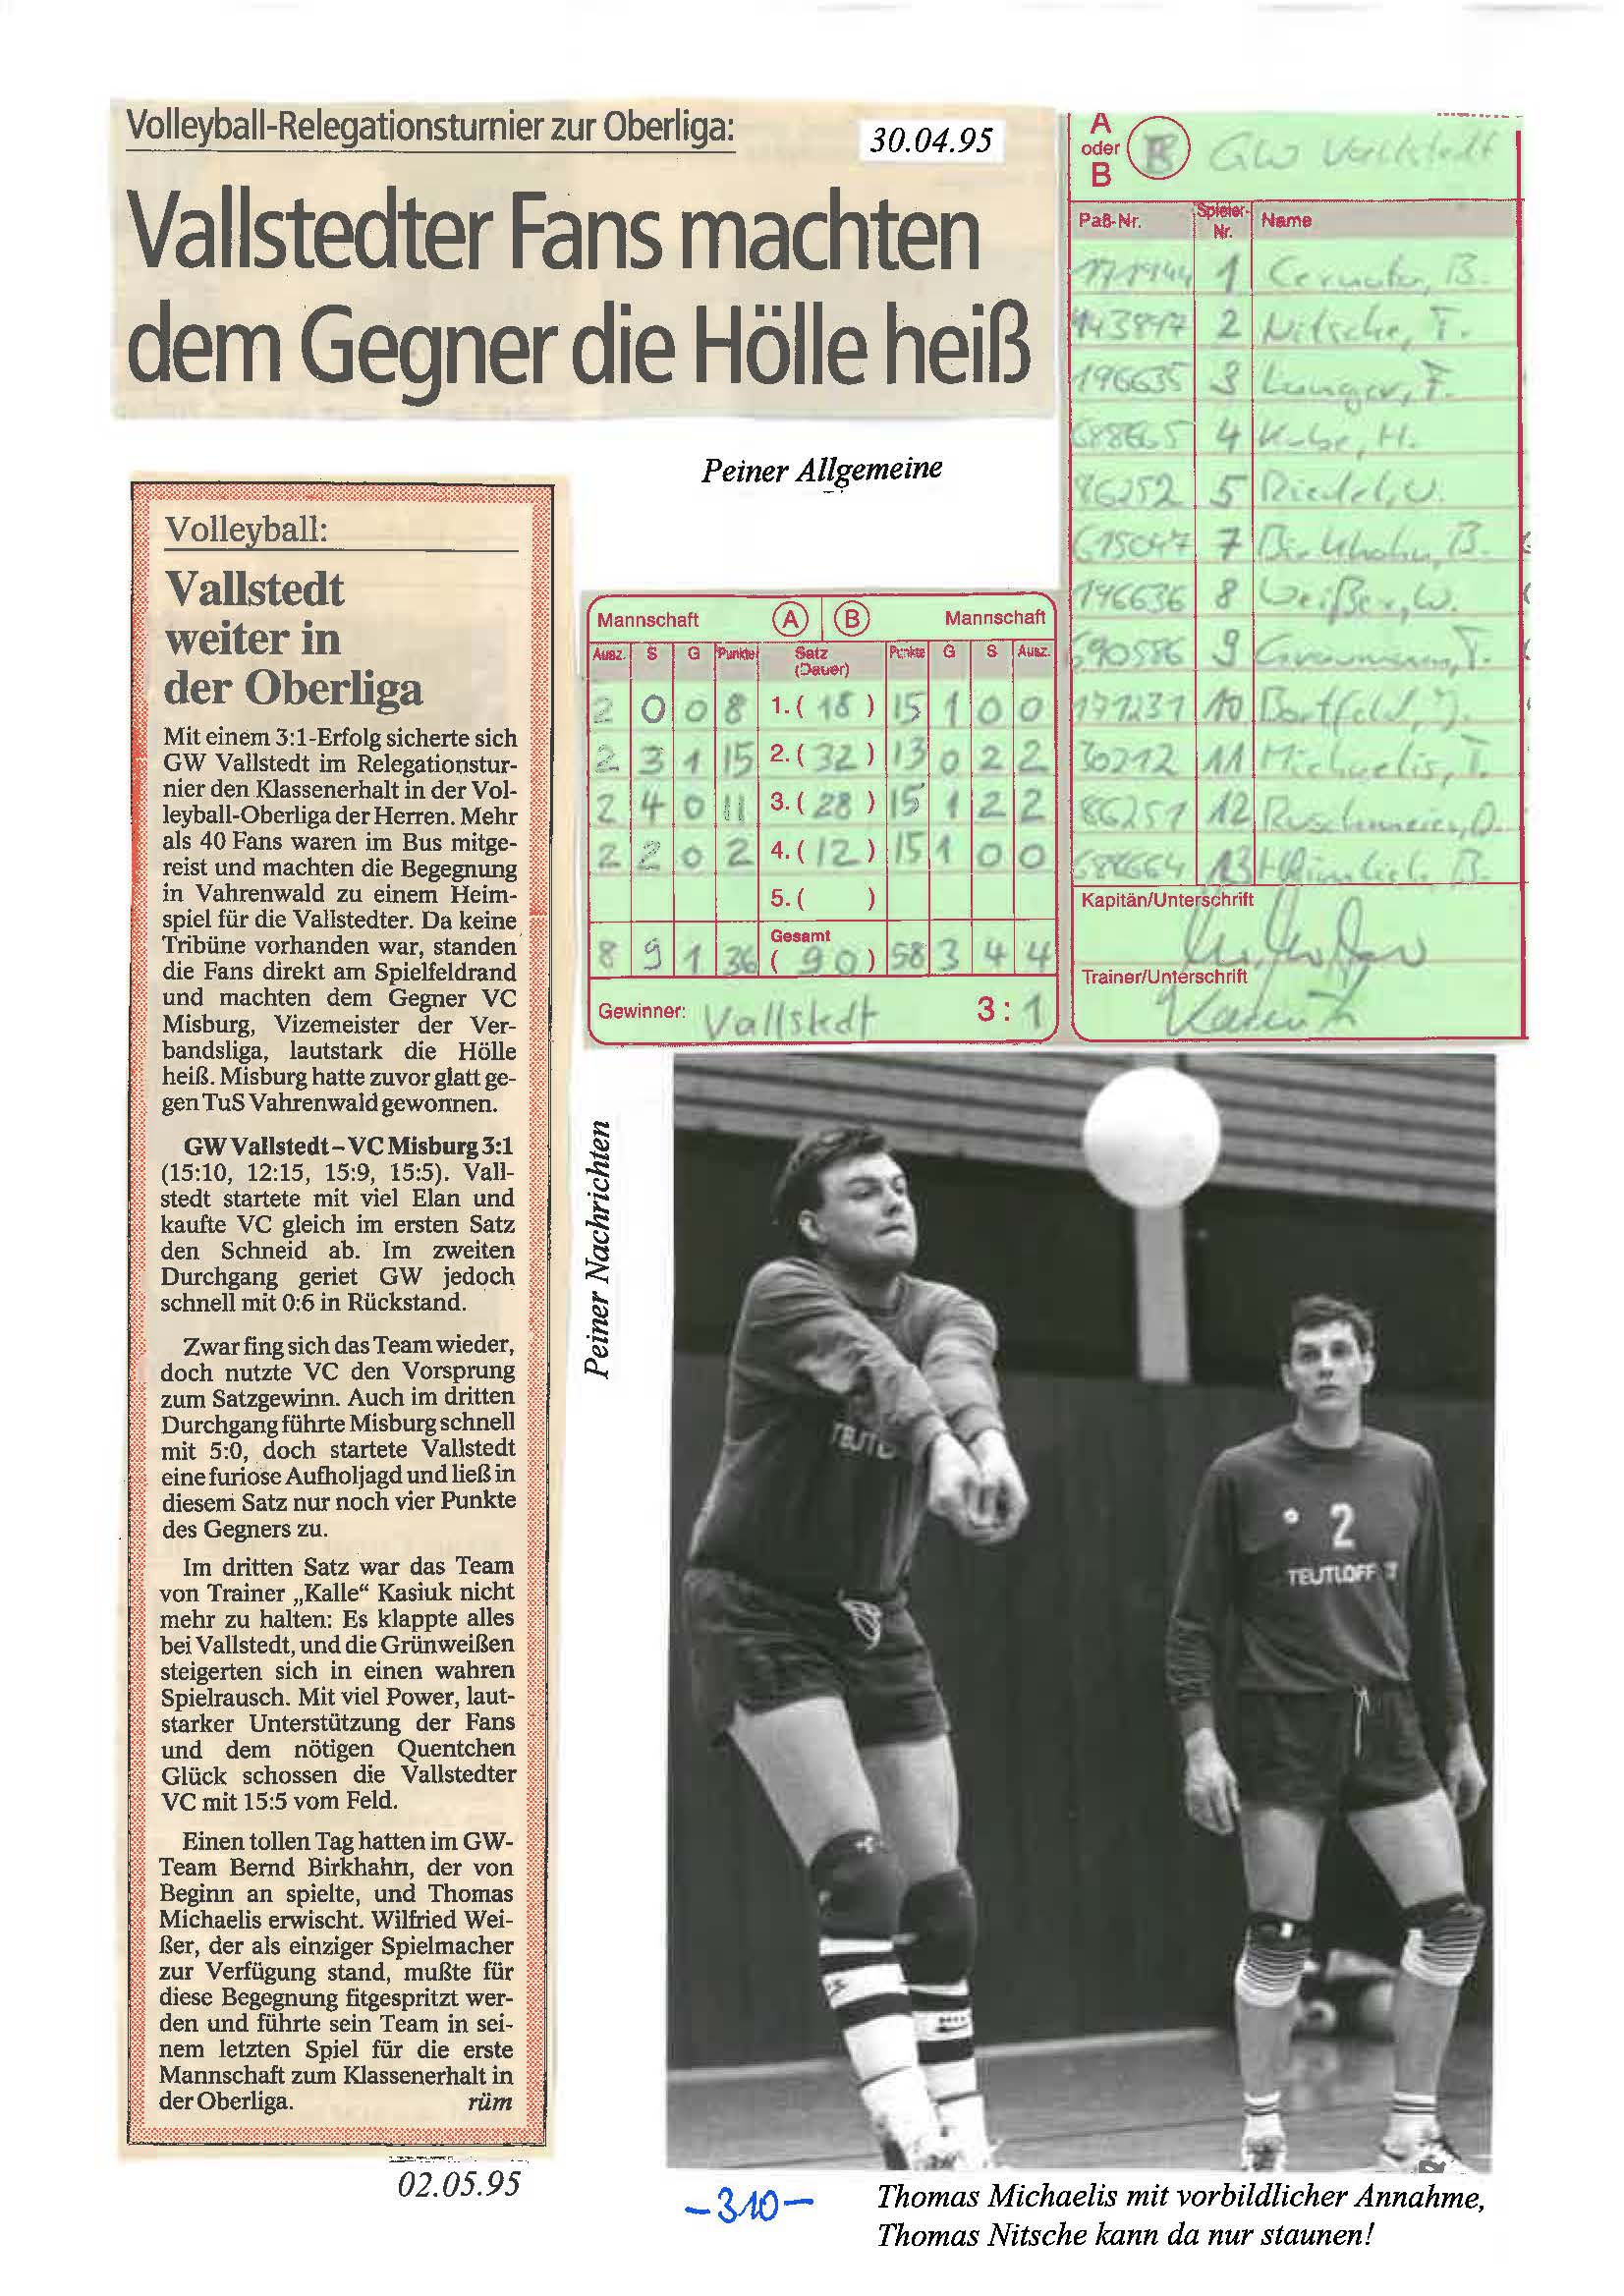 02.05.95 Oberliga gesichert